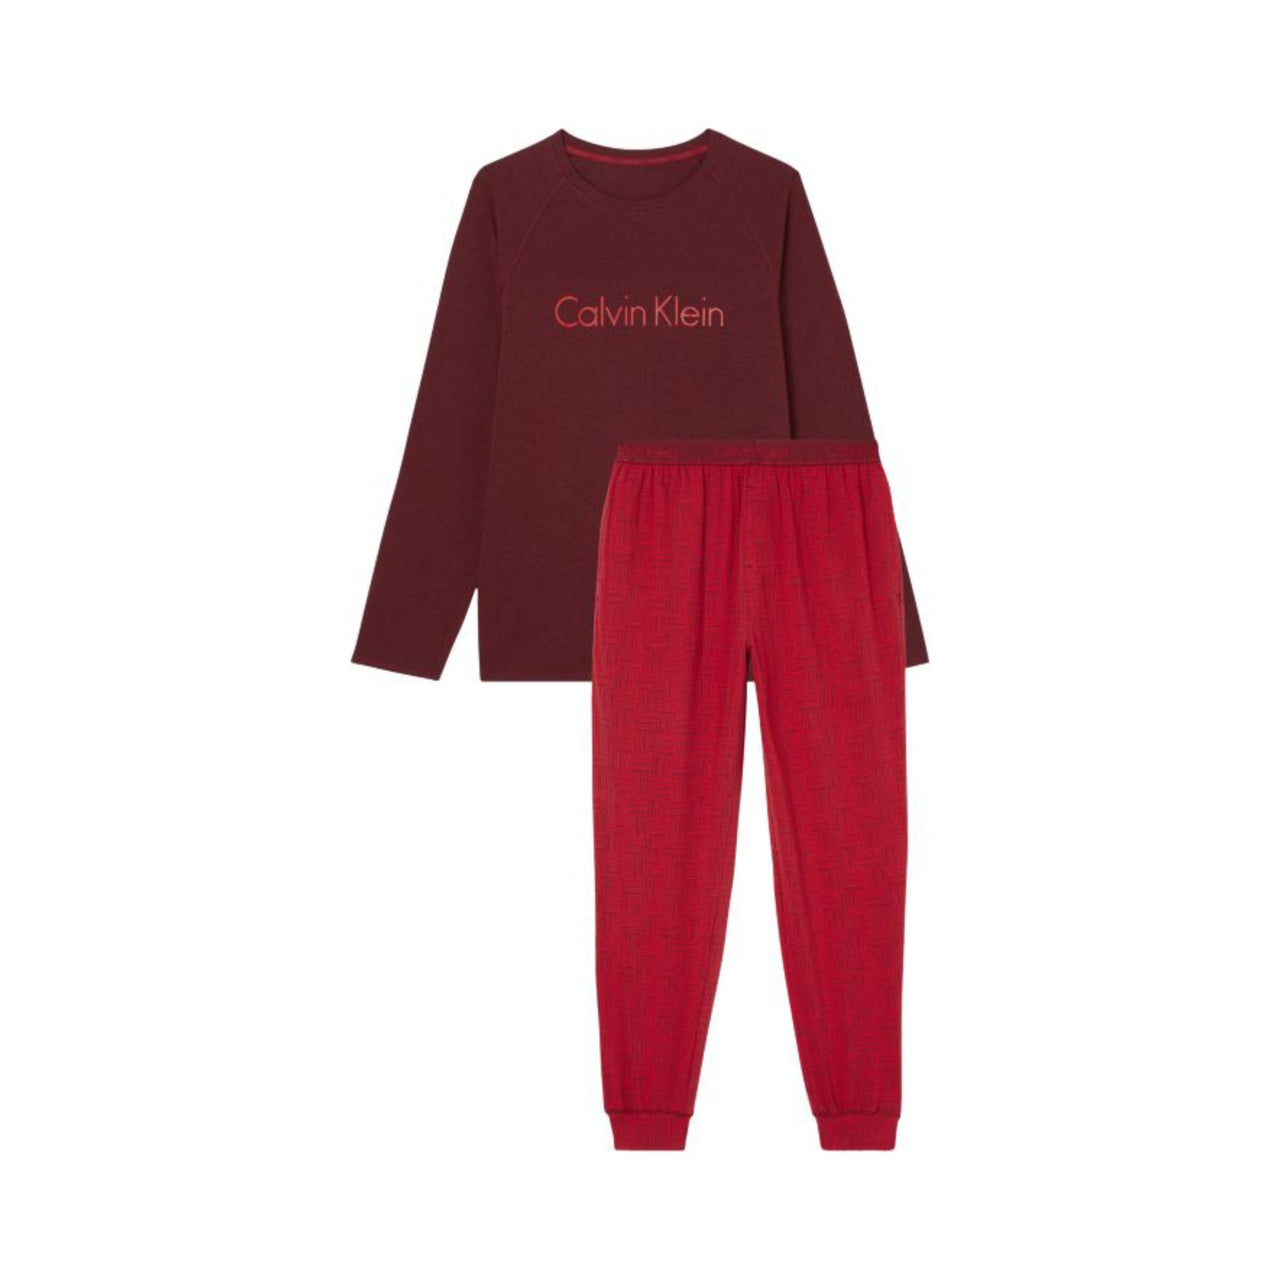 Pijamas Calvin Klein Hombre L/S Pant Set - Medina Menswear®